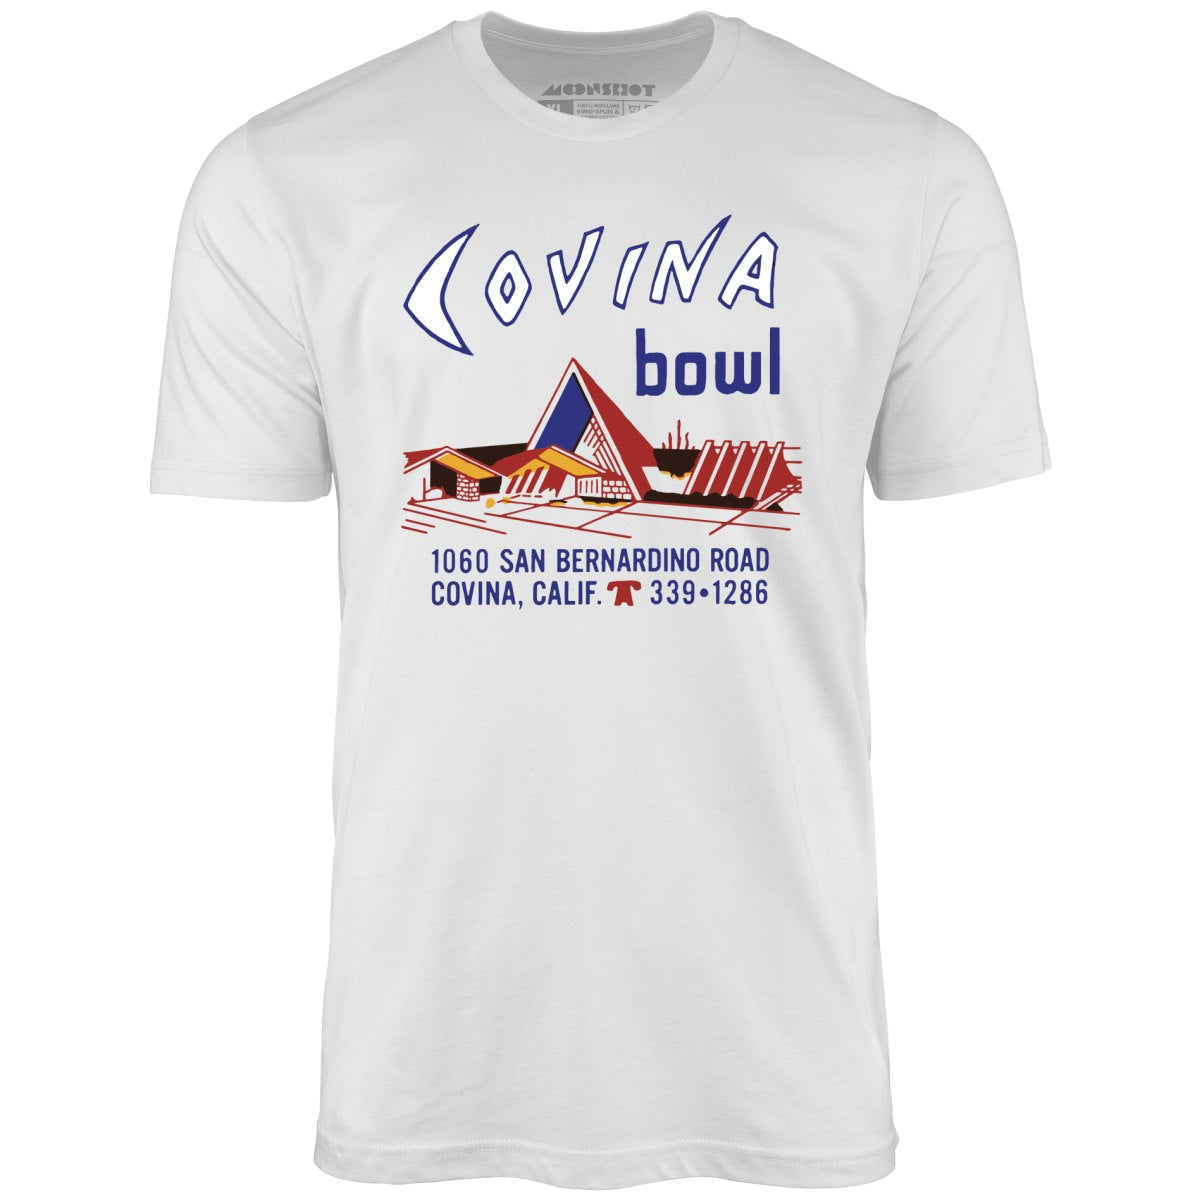 Covina Bowl - Covina, CA - Vintage Bowling Alley - Unisex T-Shirt